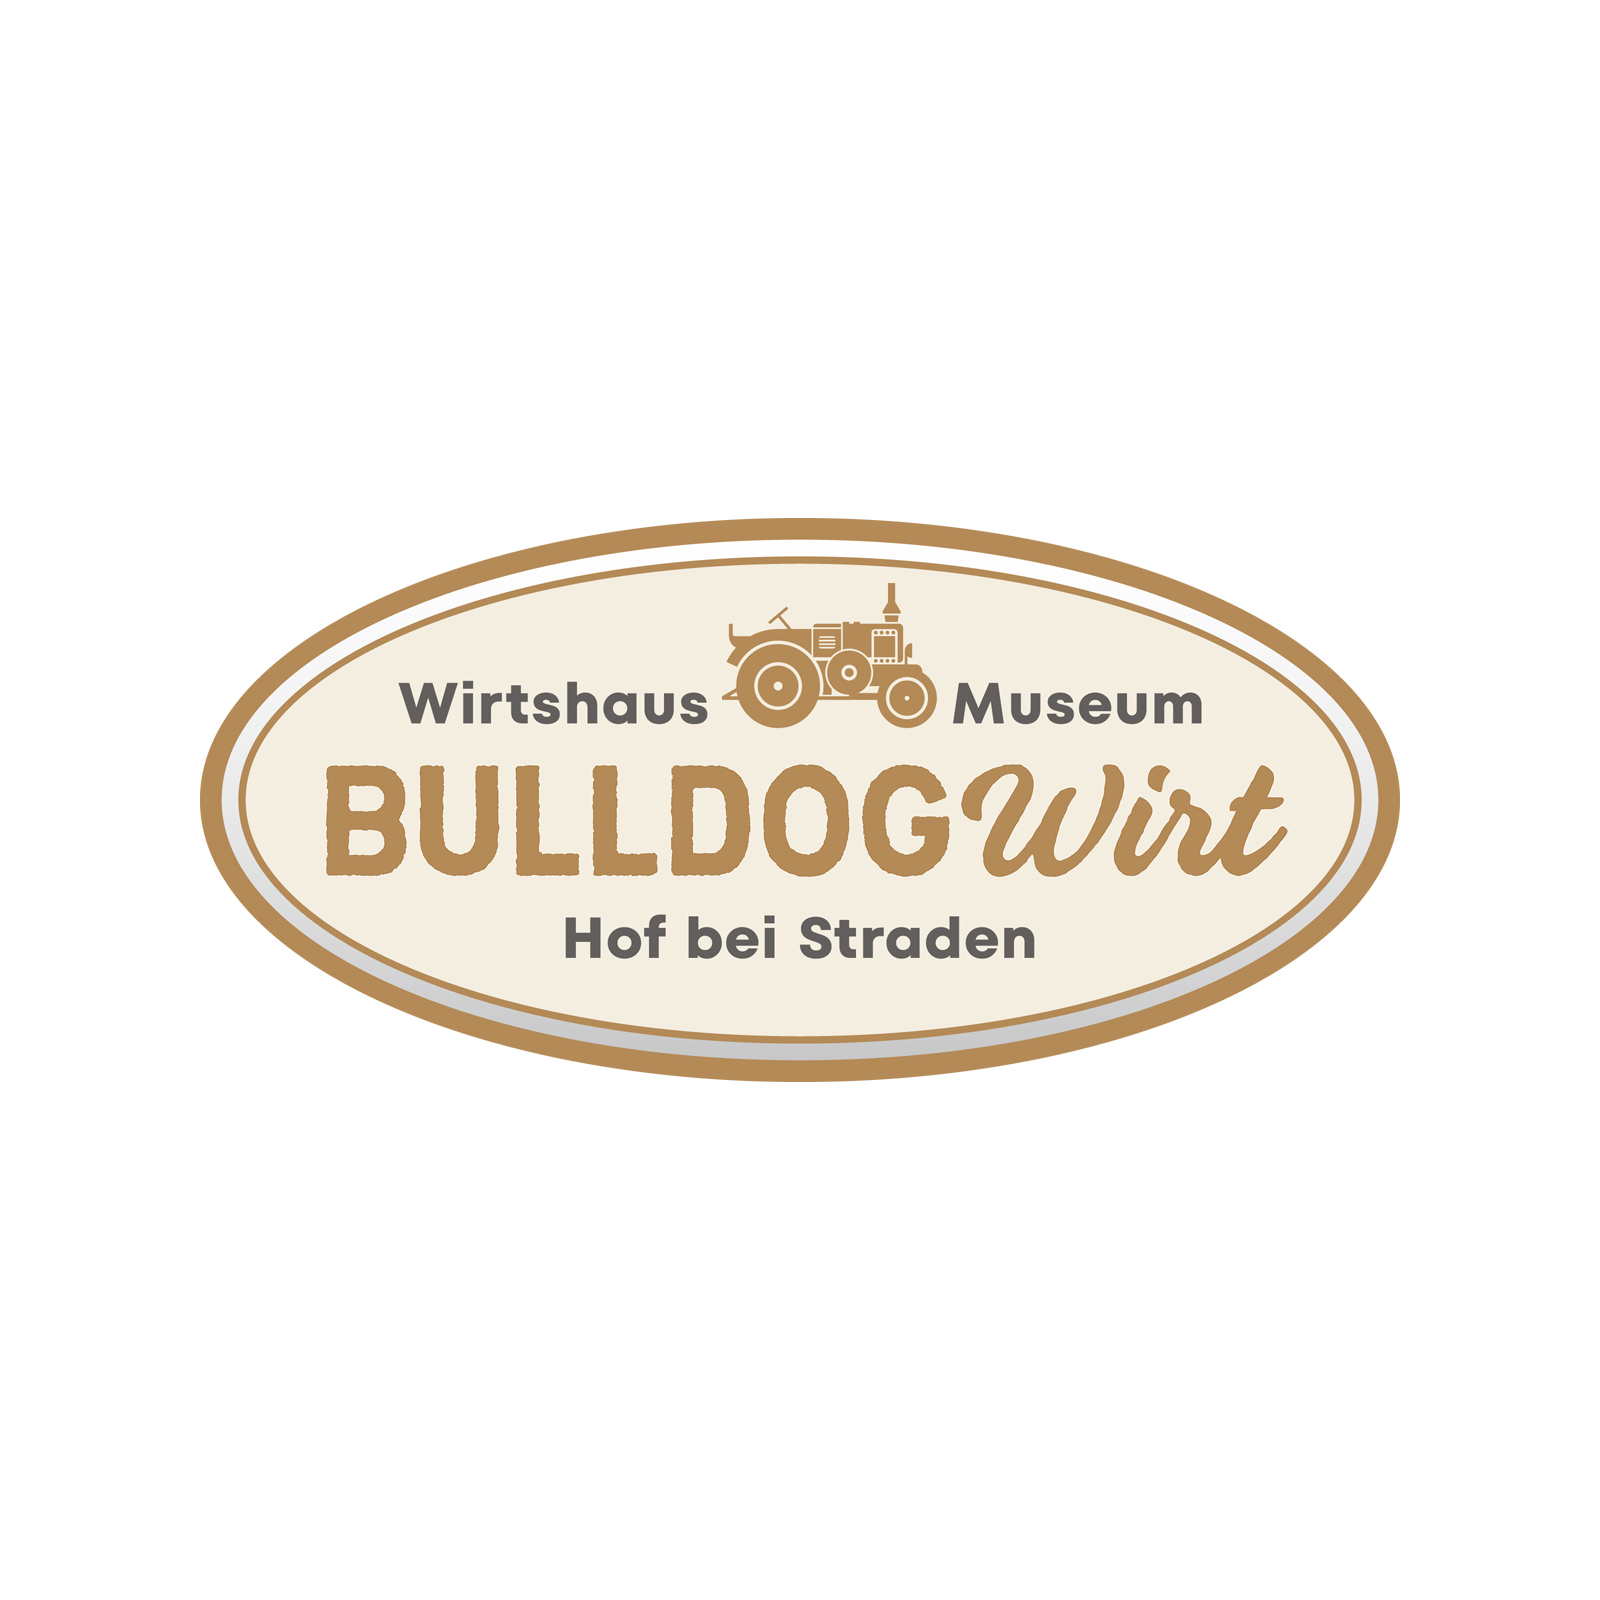 BulldogWirt Straden